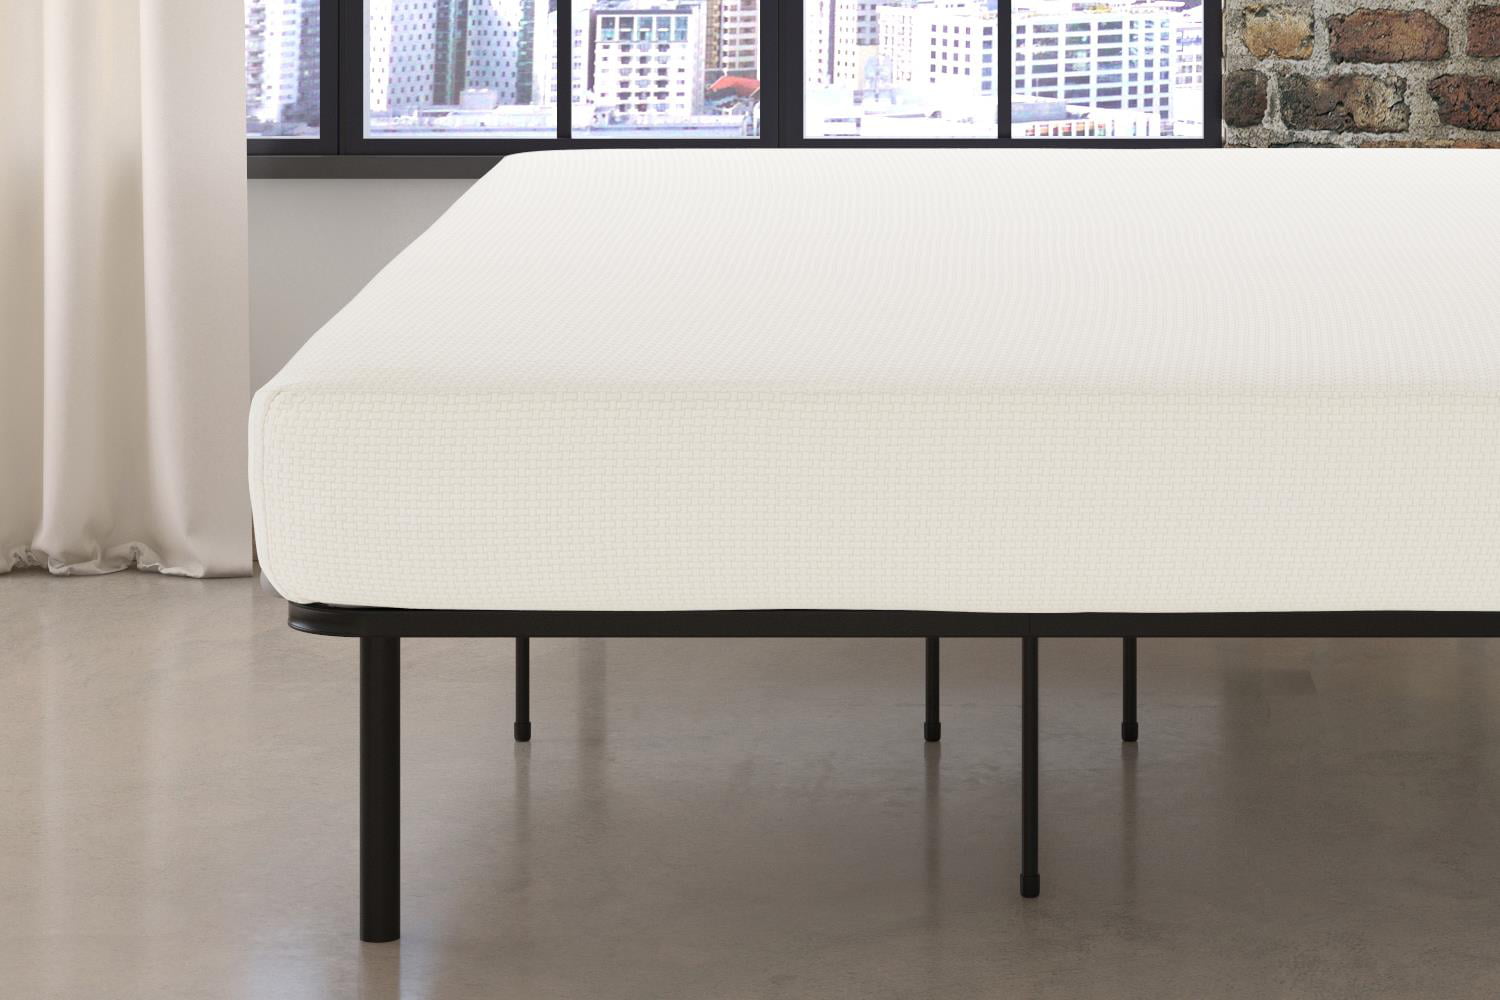 cheapest price on signature sleep gold mattress